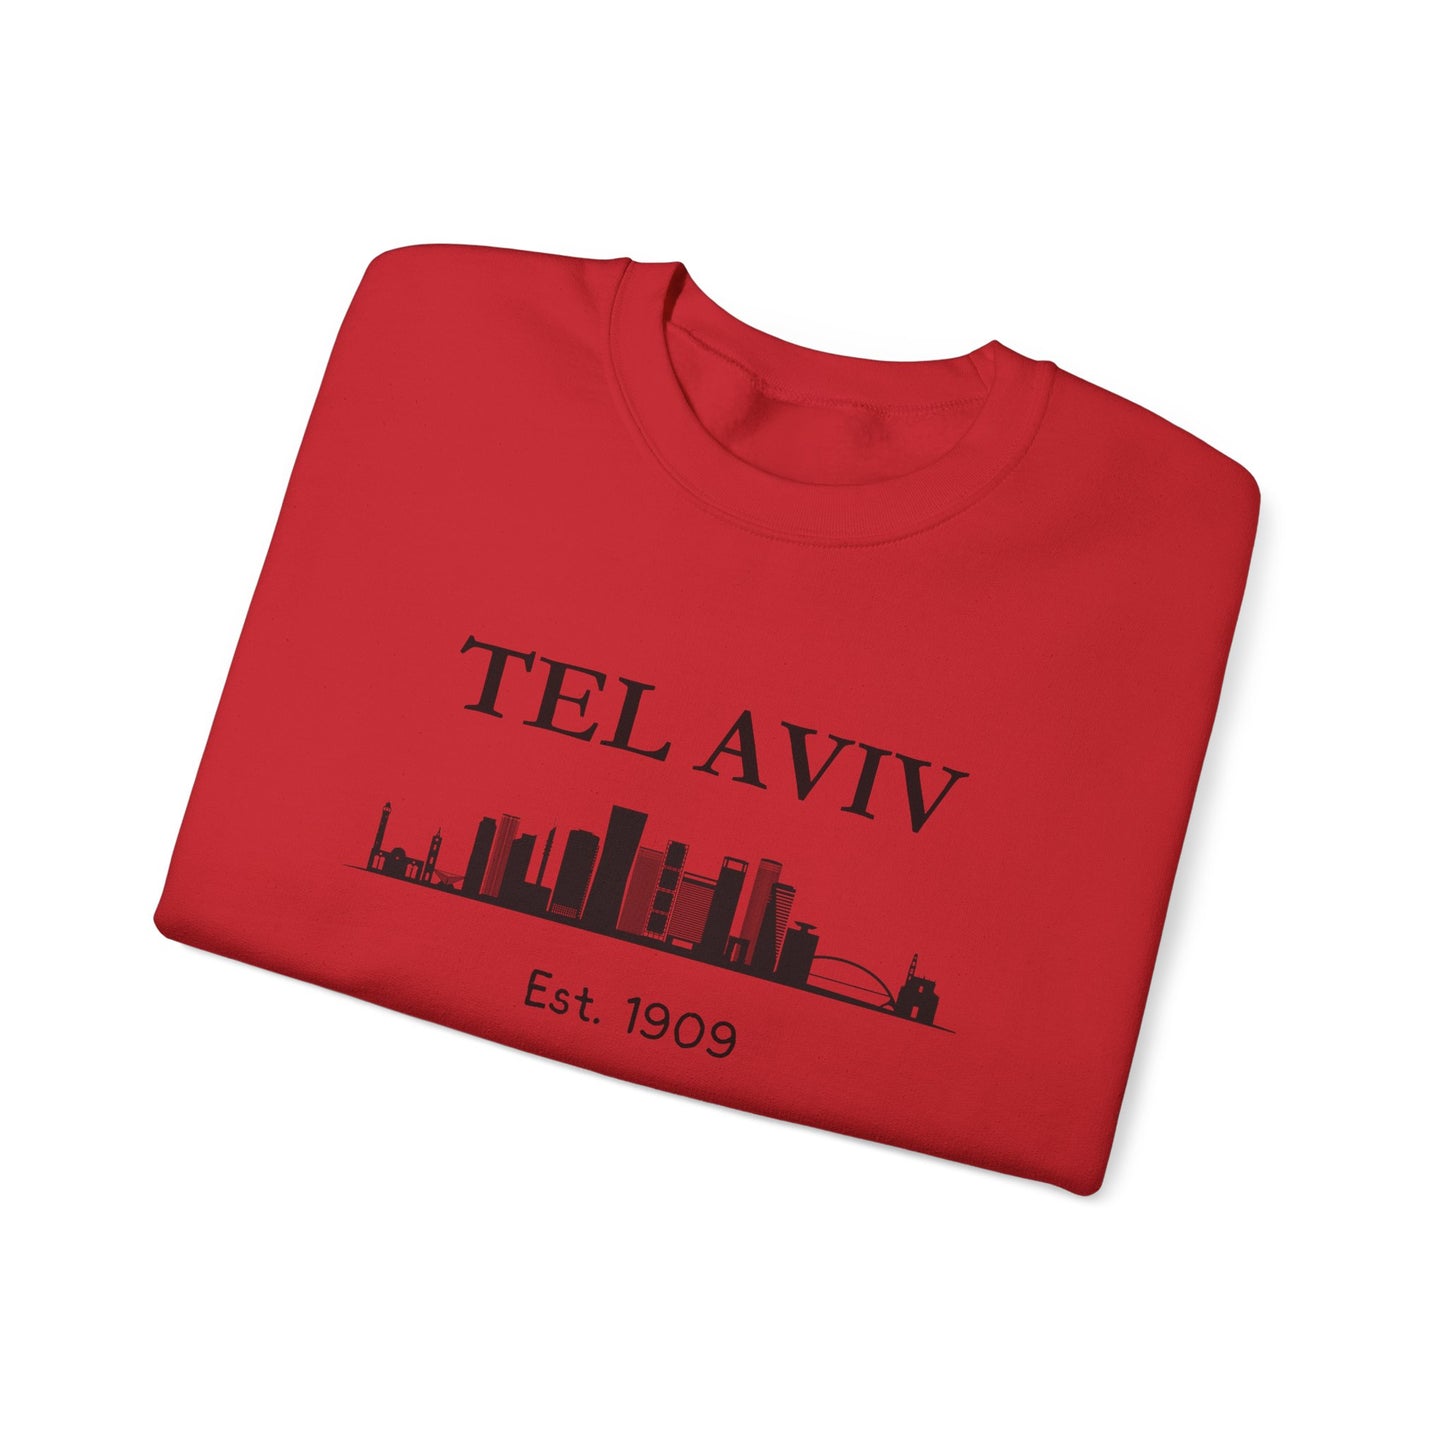 Tel Aviv Sweatshirt